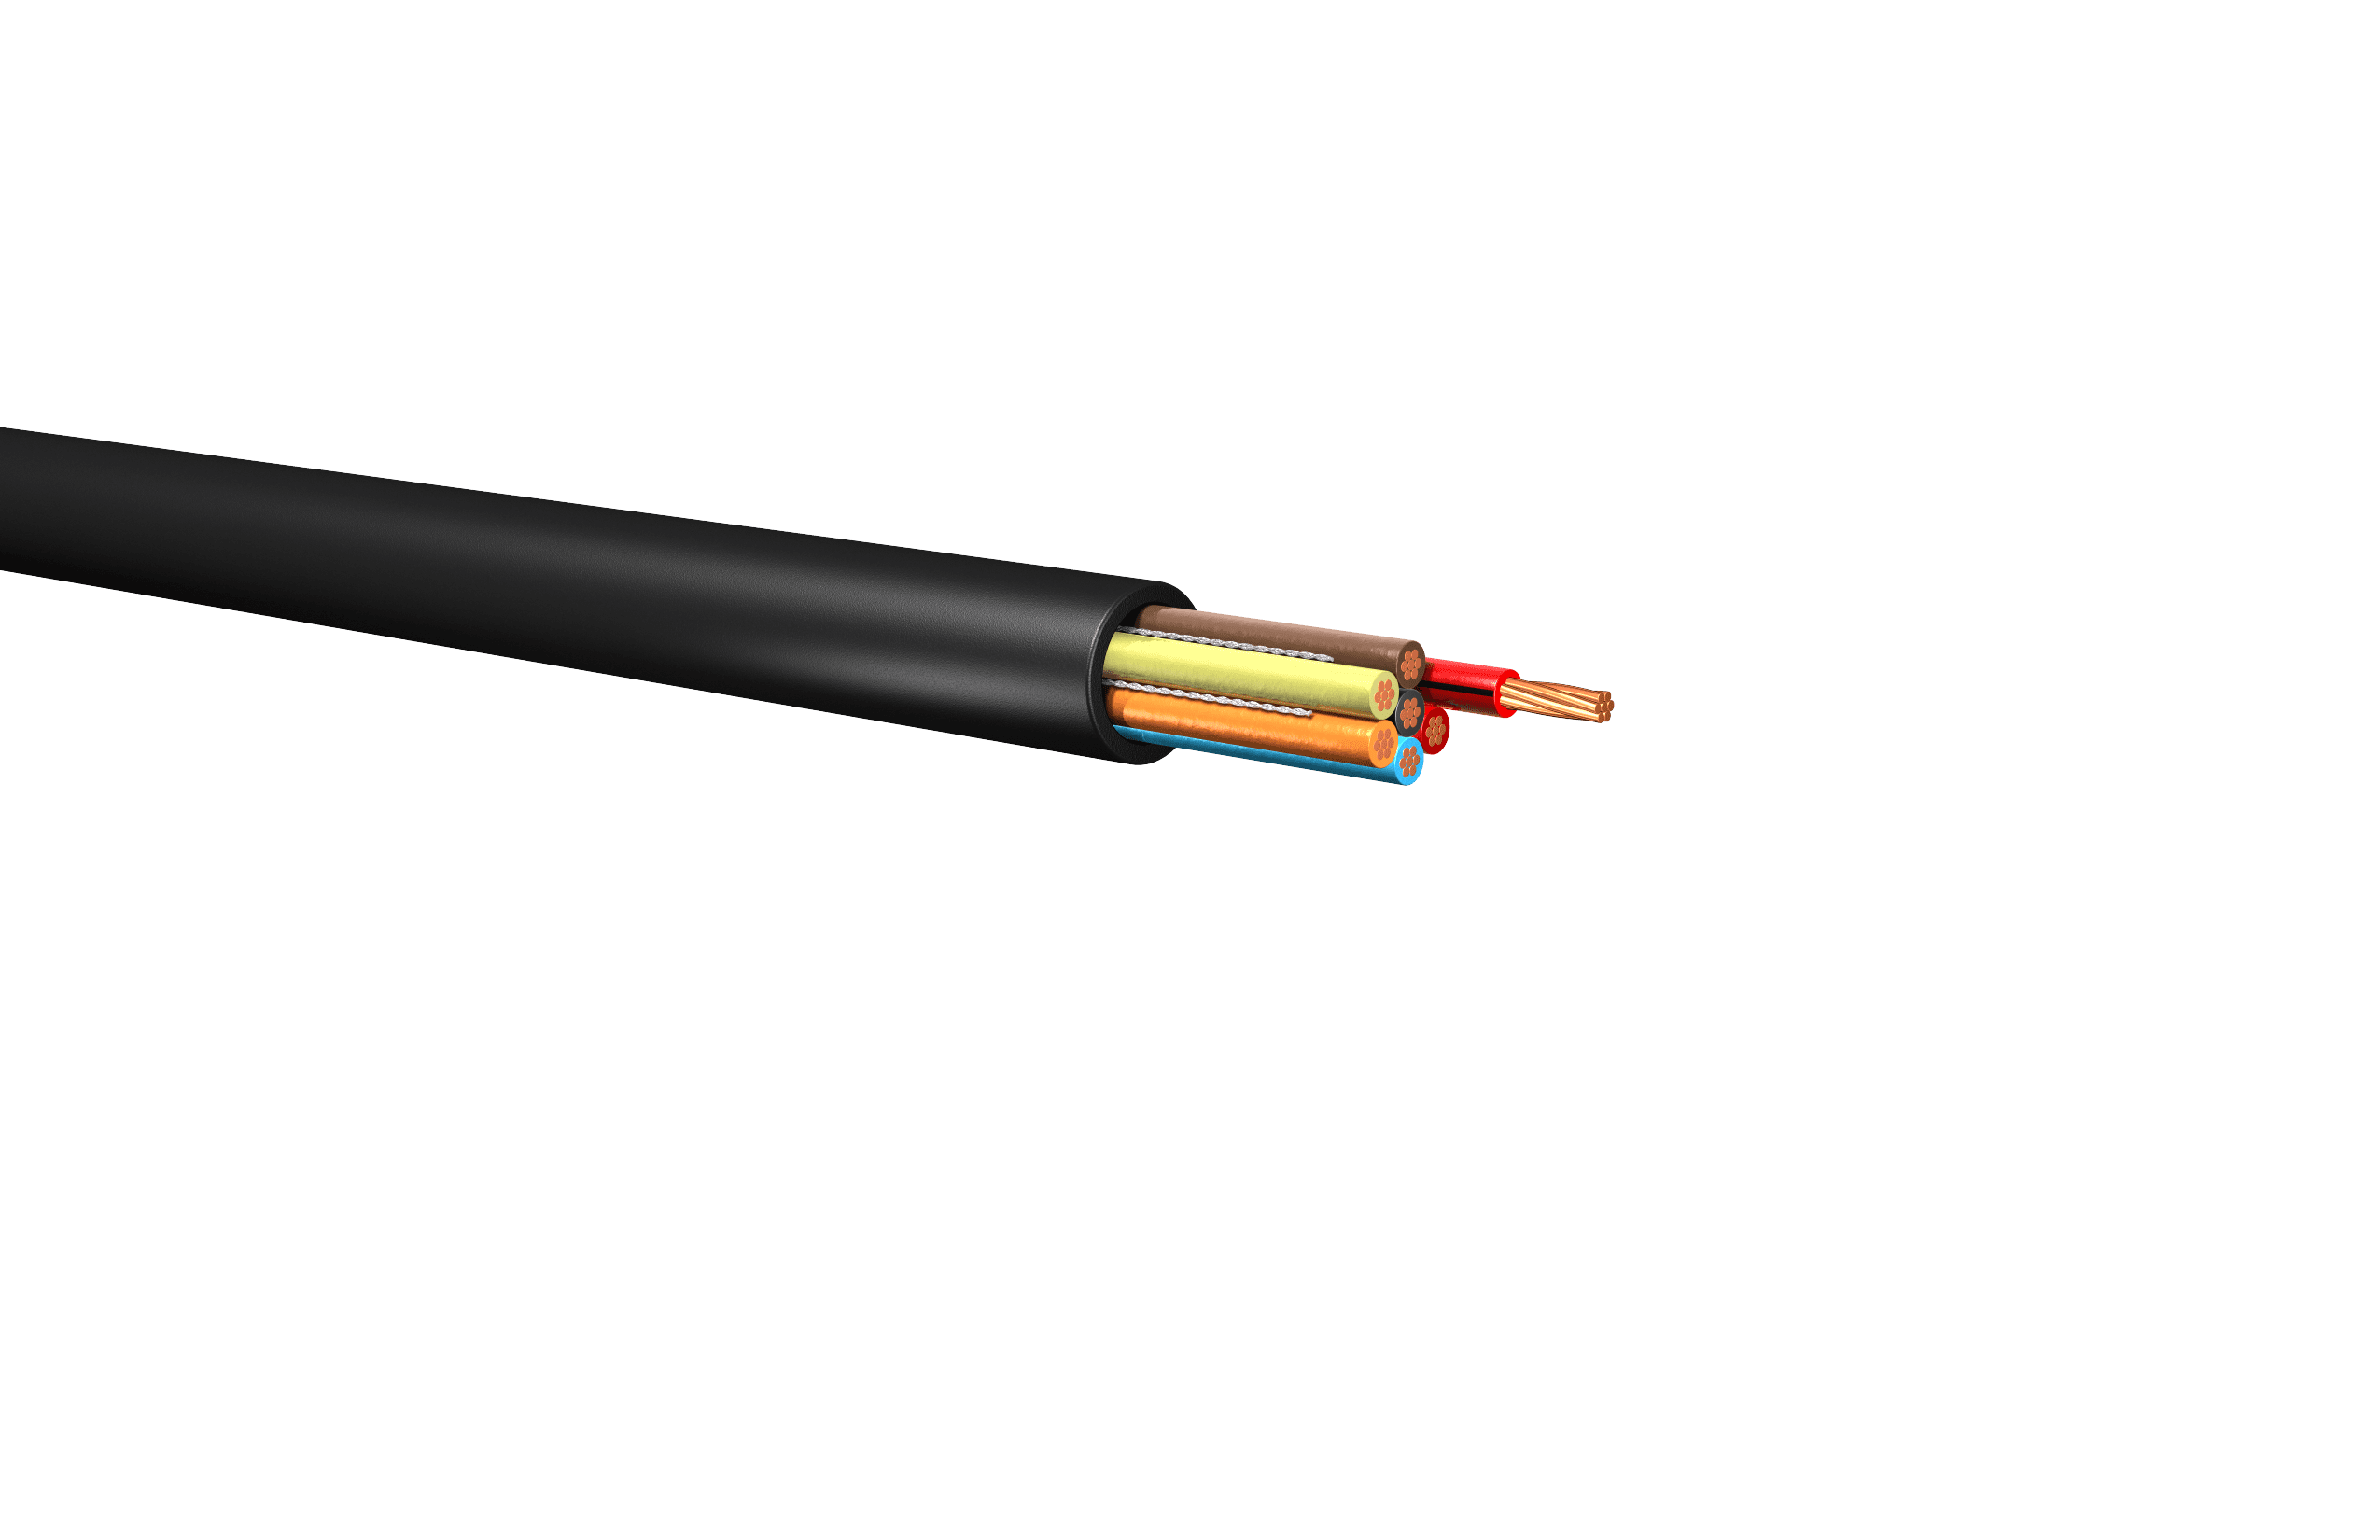 HW150: 600V Control Cable, TFN, PVC/Nylon (18-16 AWG)